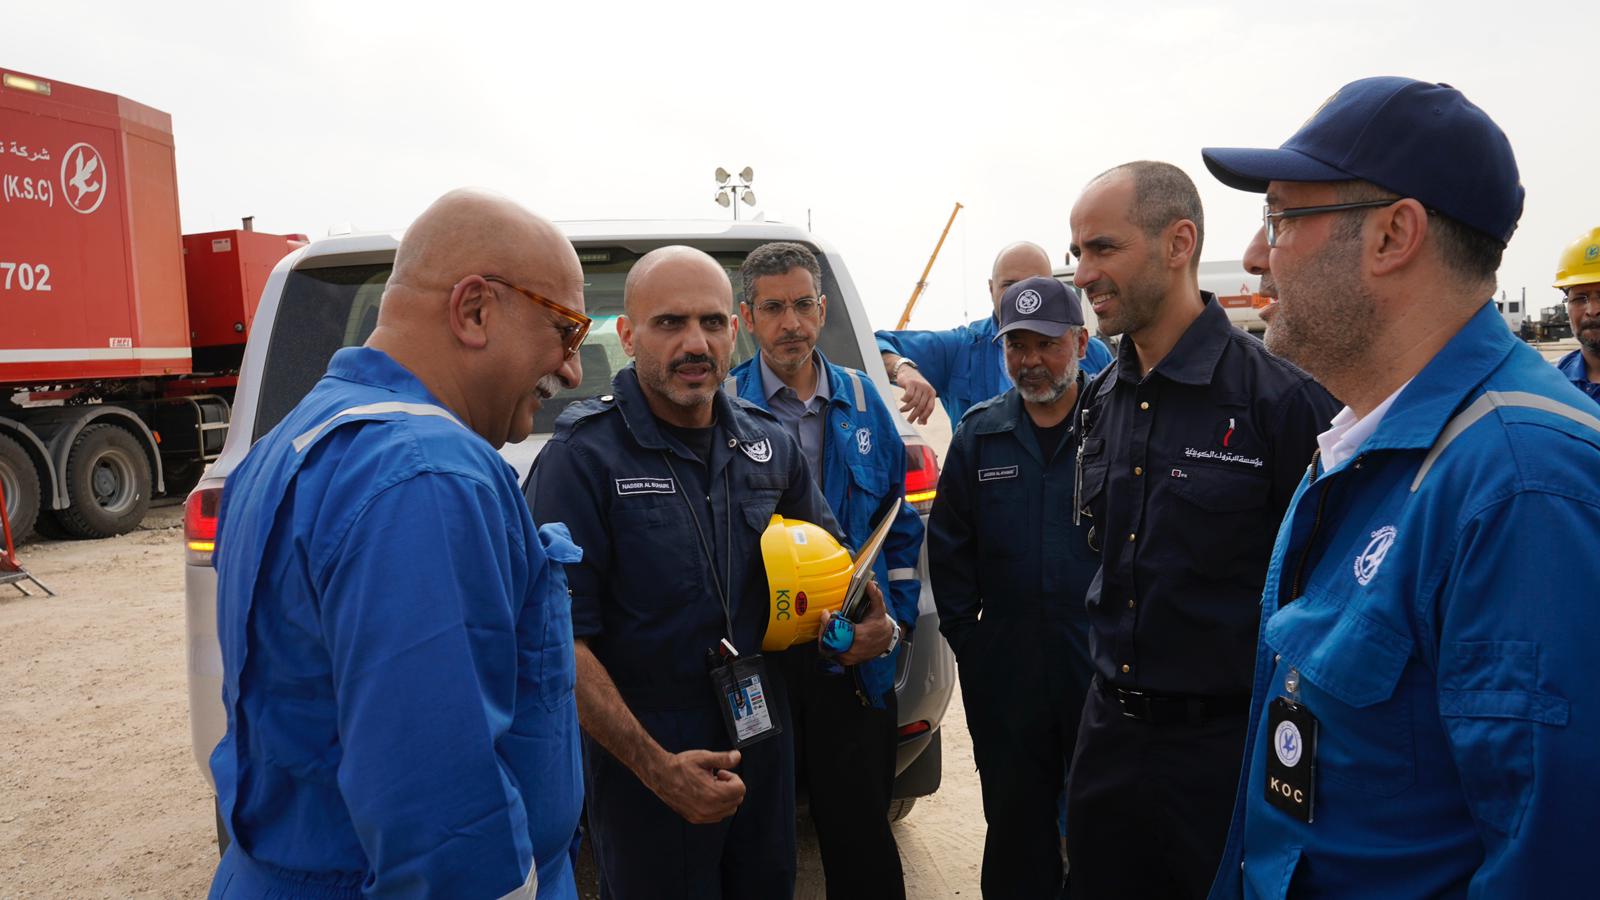 CEO of KPC inspects oil spill site in western Kuwait